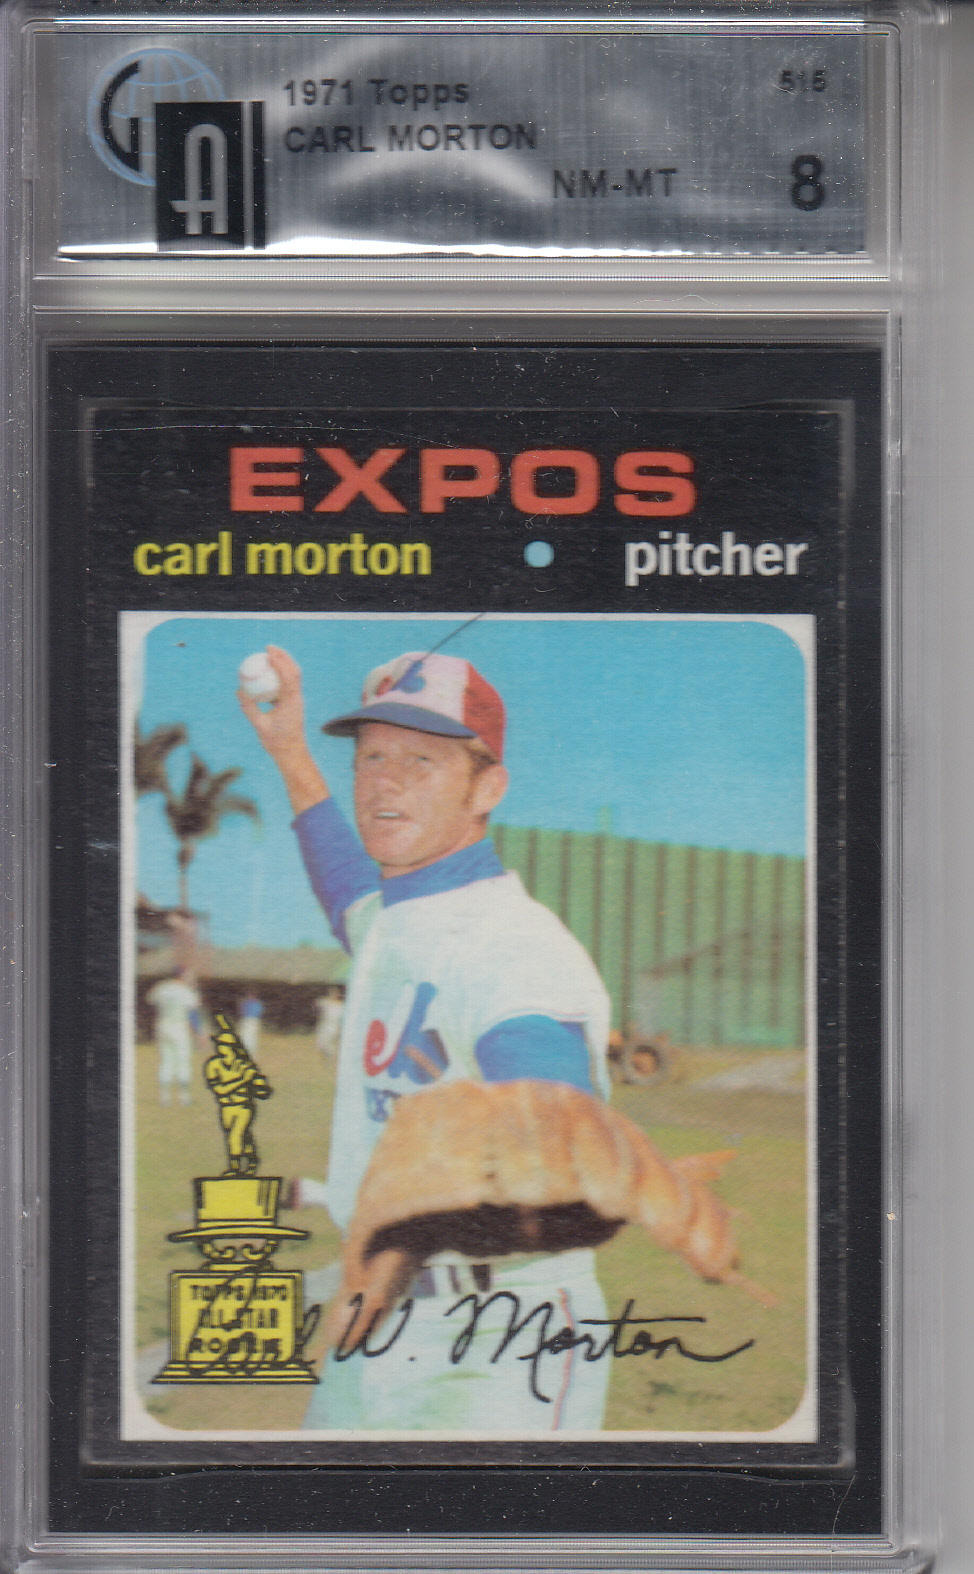 1971 Topps #515 Carl Morton EXPOS GAI 8 NM-MT Z15698